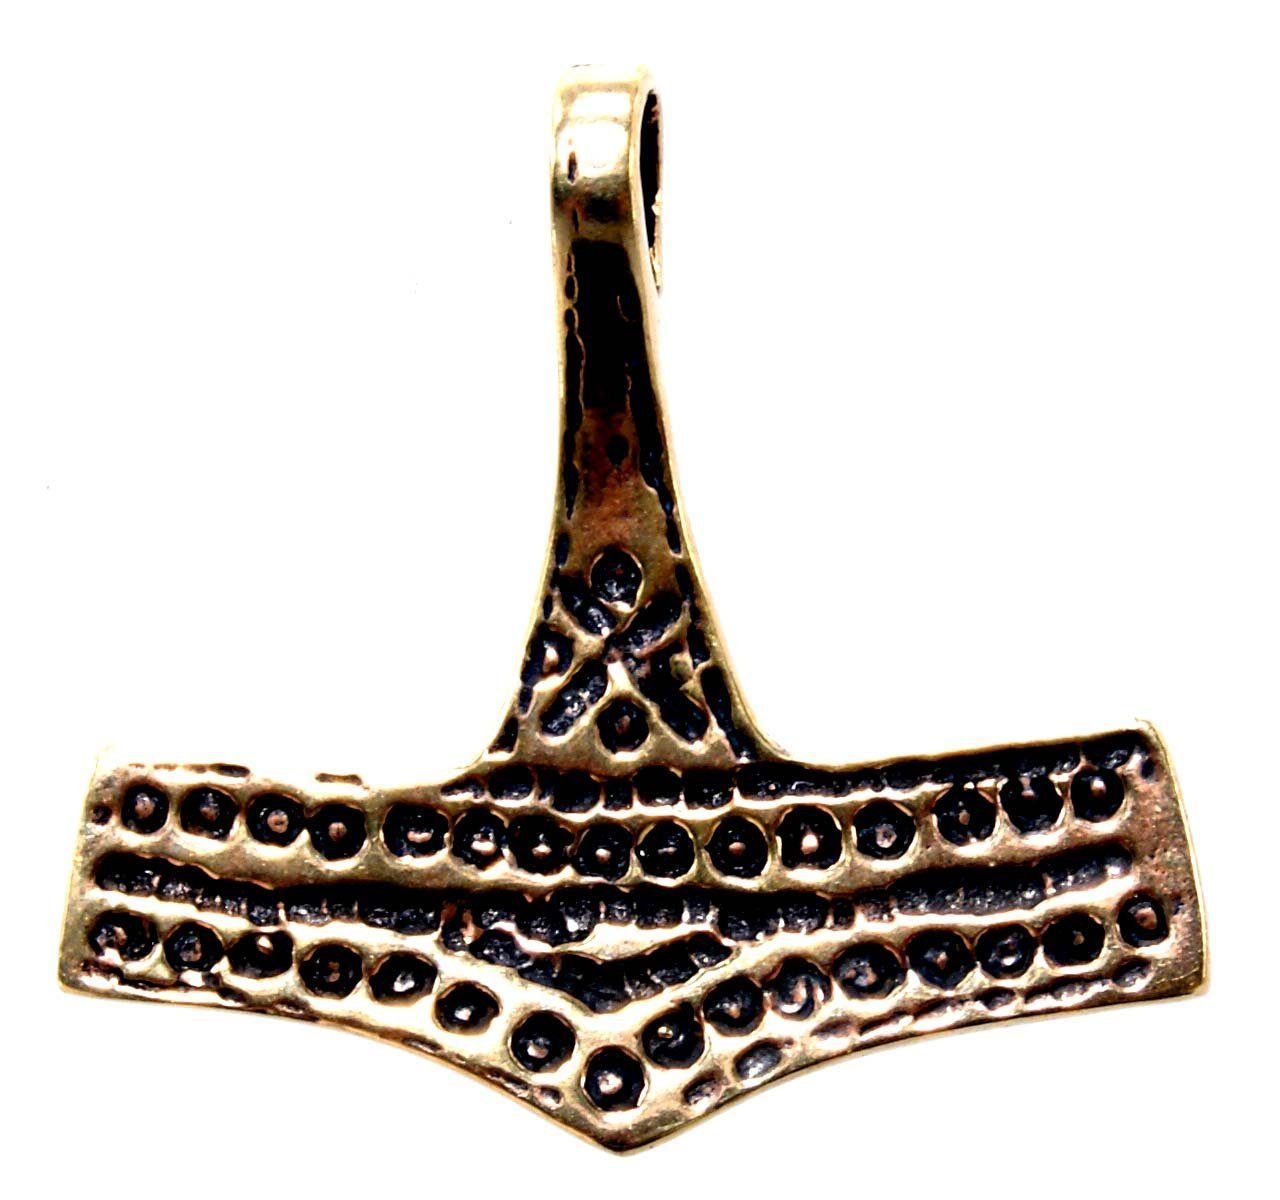 Anhänger Bronze Thorshammer Thor Odin Kiss Romersdal of Thorhammer Kettenanhänger Leather